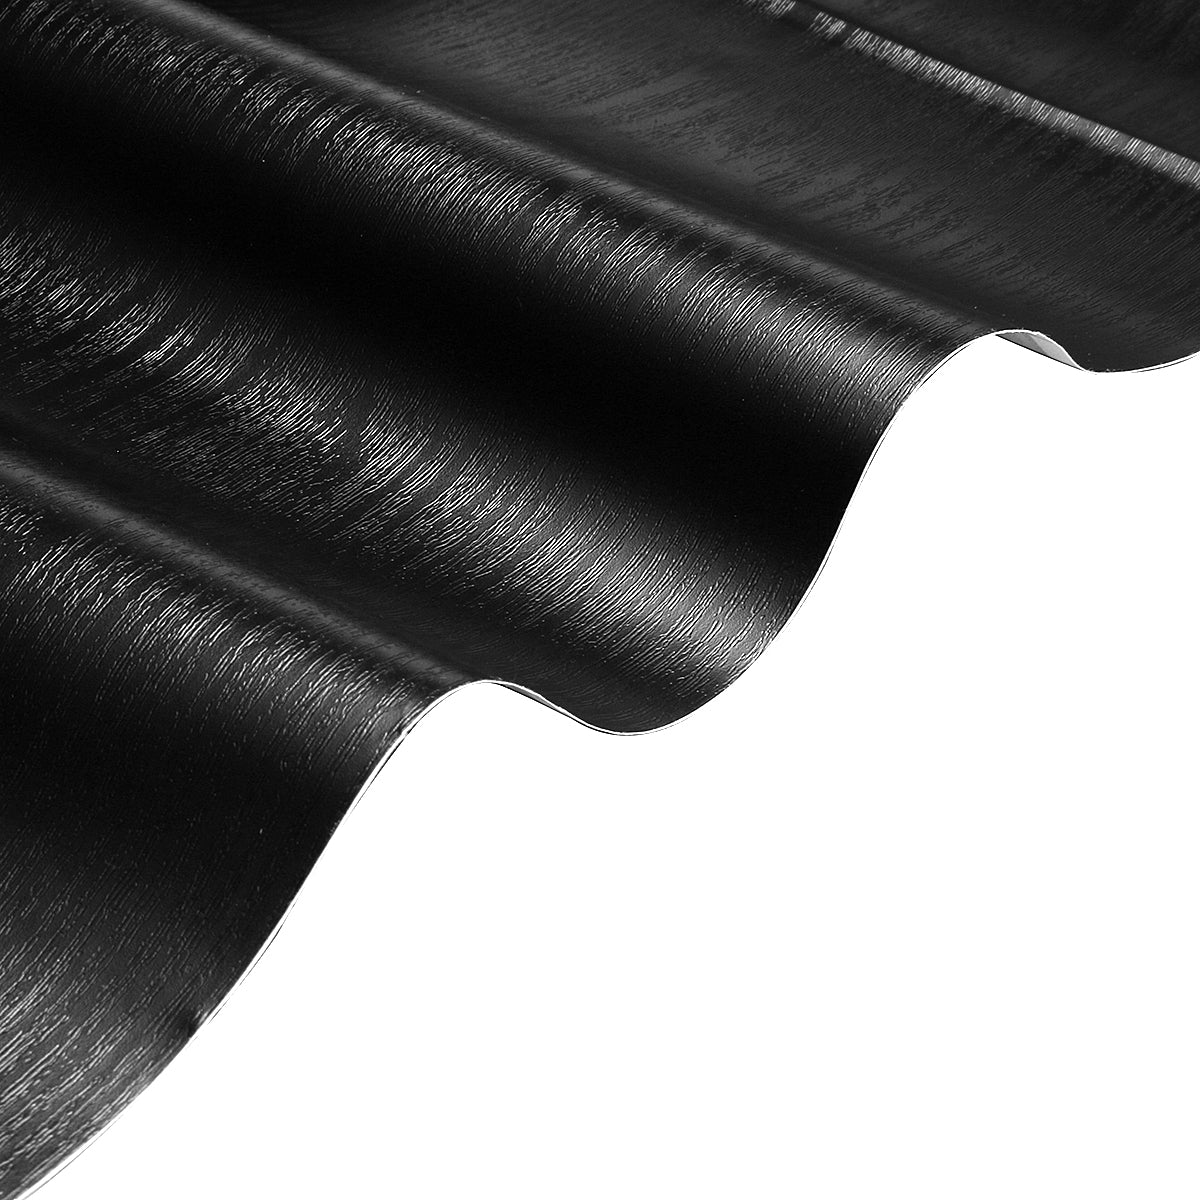 Black Wood Looking Textured Self Adhesive Decor Contact Paper Vinyl Shelf Liner Wall Paper